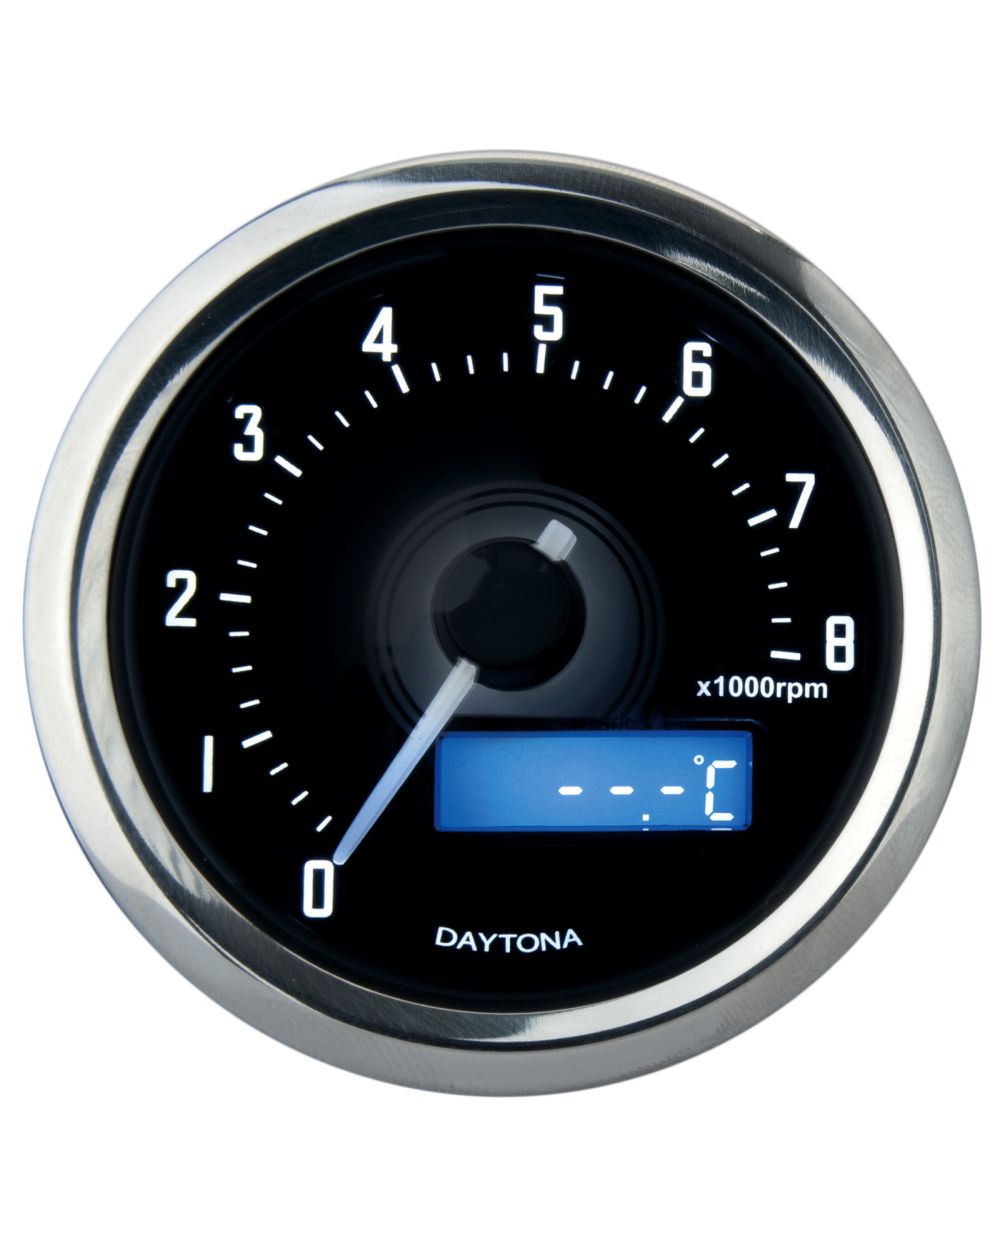 Daytona 'Velona' Tachometer, Diam. 60x45mm, Polished. Display: RPM, °C, °C  max, RPM max, Stop Watch, White Displ. Lighting